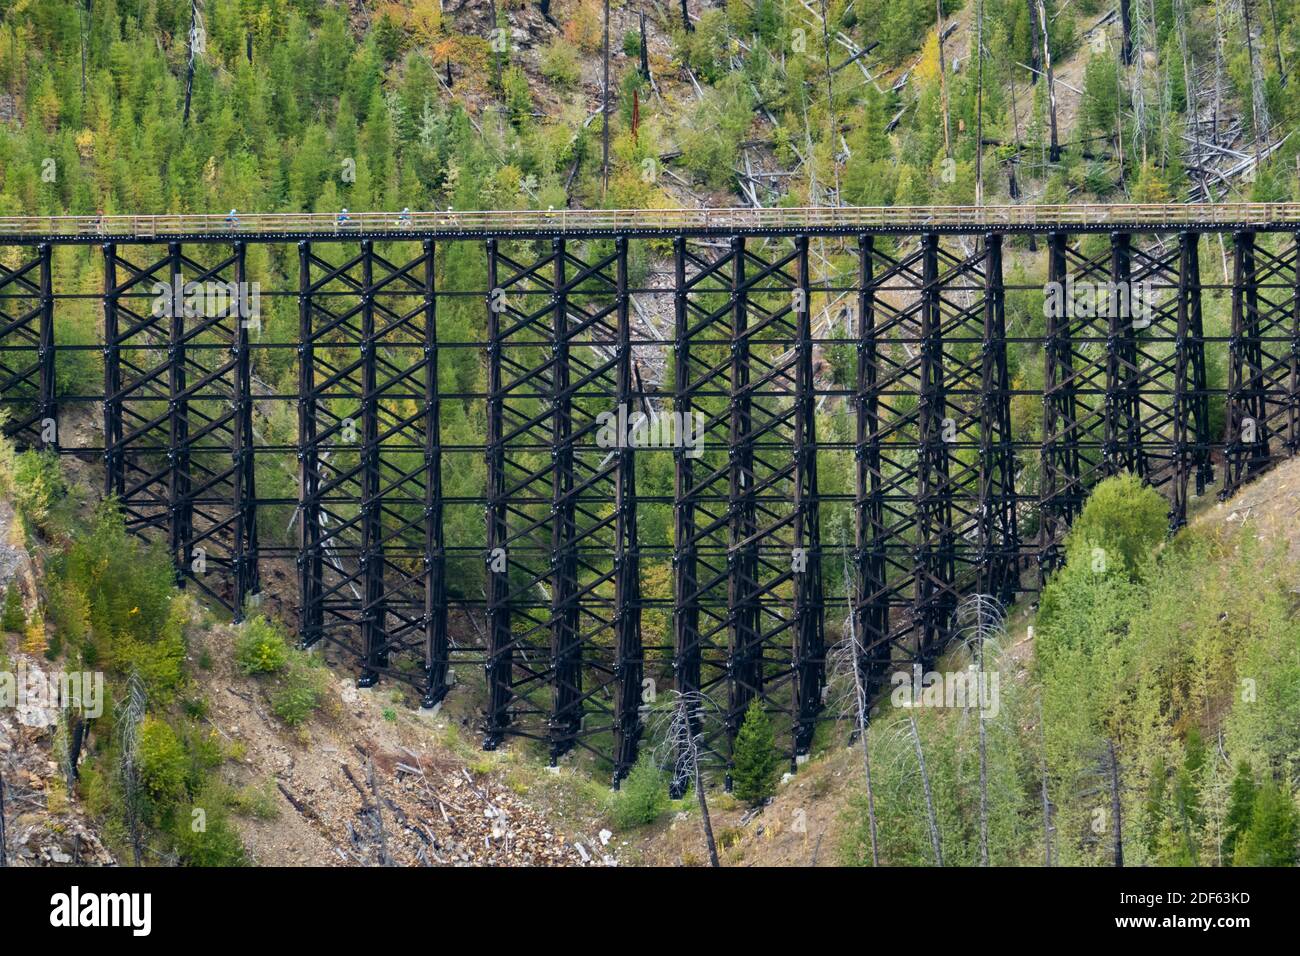 A trestle bridge in the Myra Canyon, on the Kettle Valley Rail Trail, Okanagan, British Columbia, Canada. Stock Photo